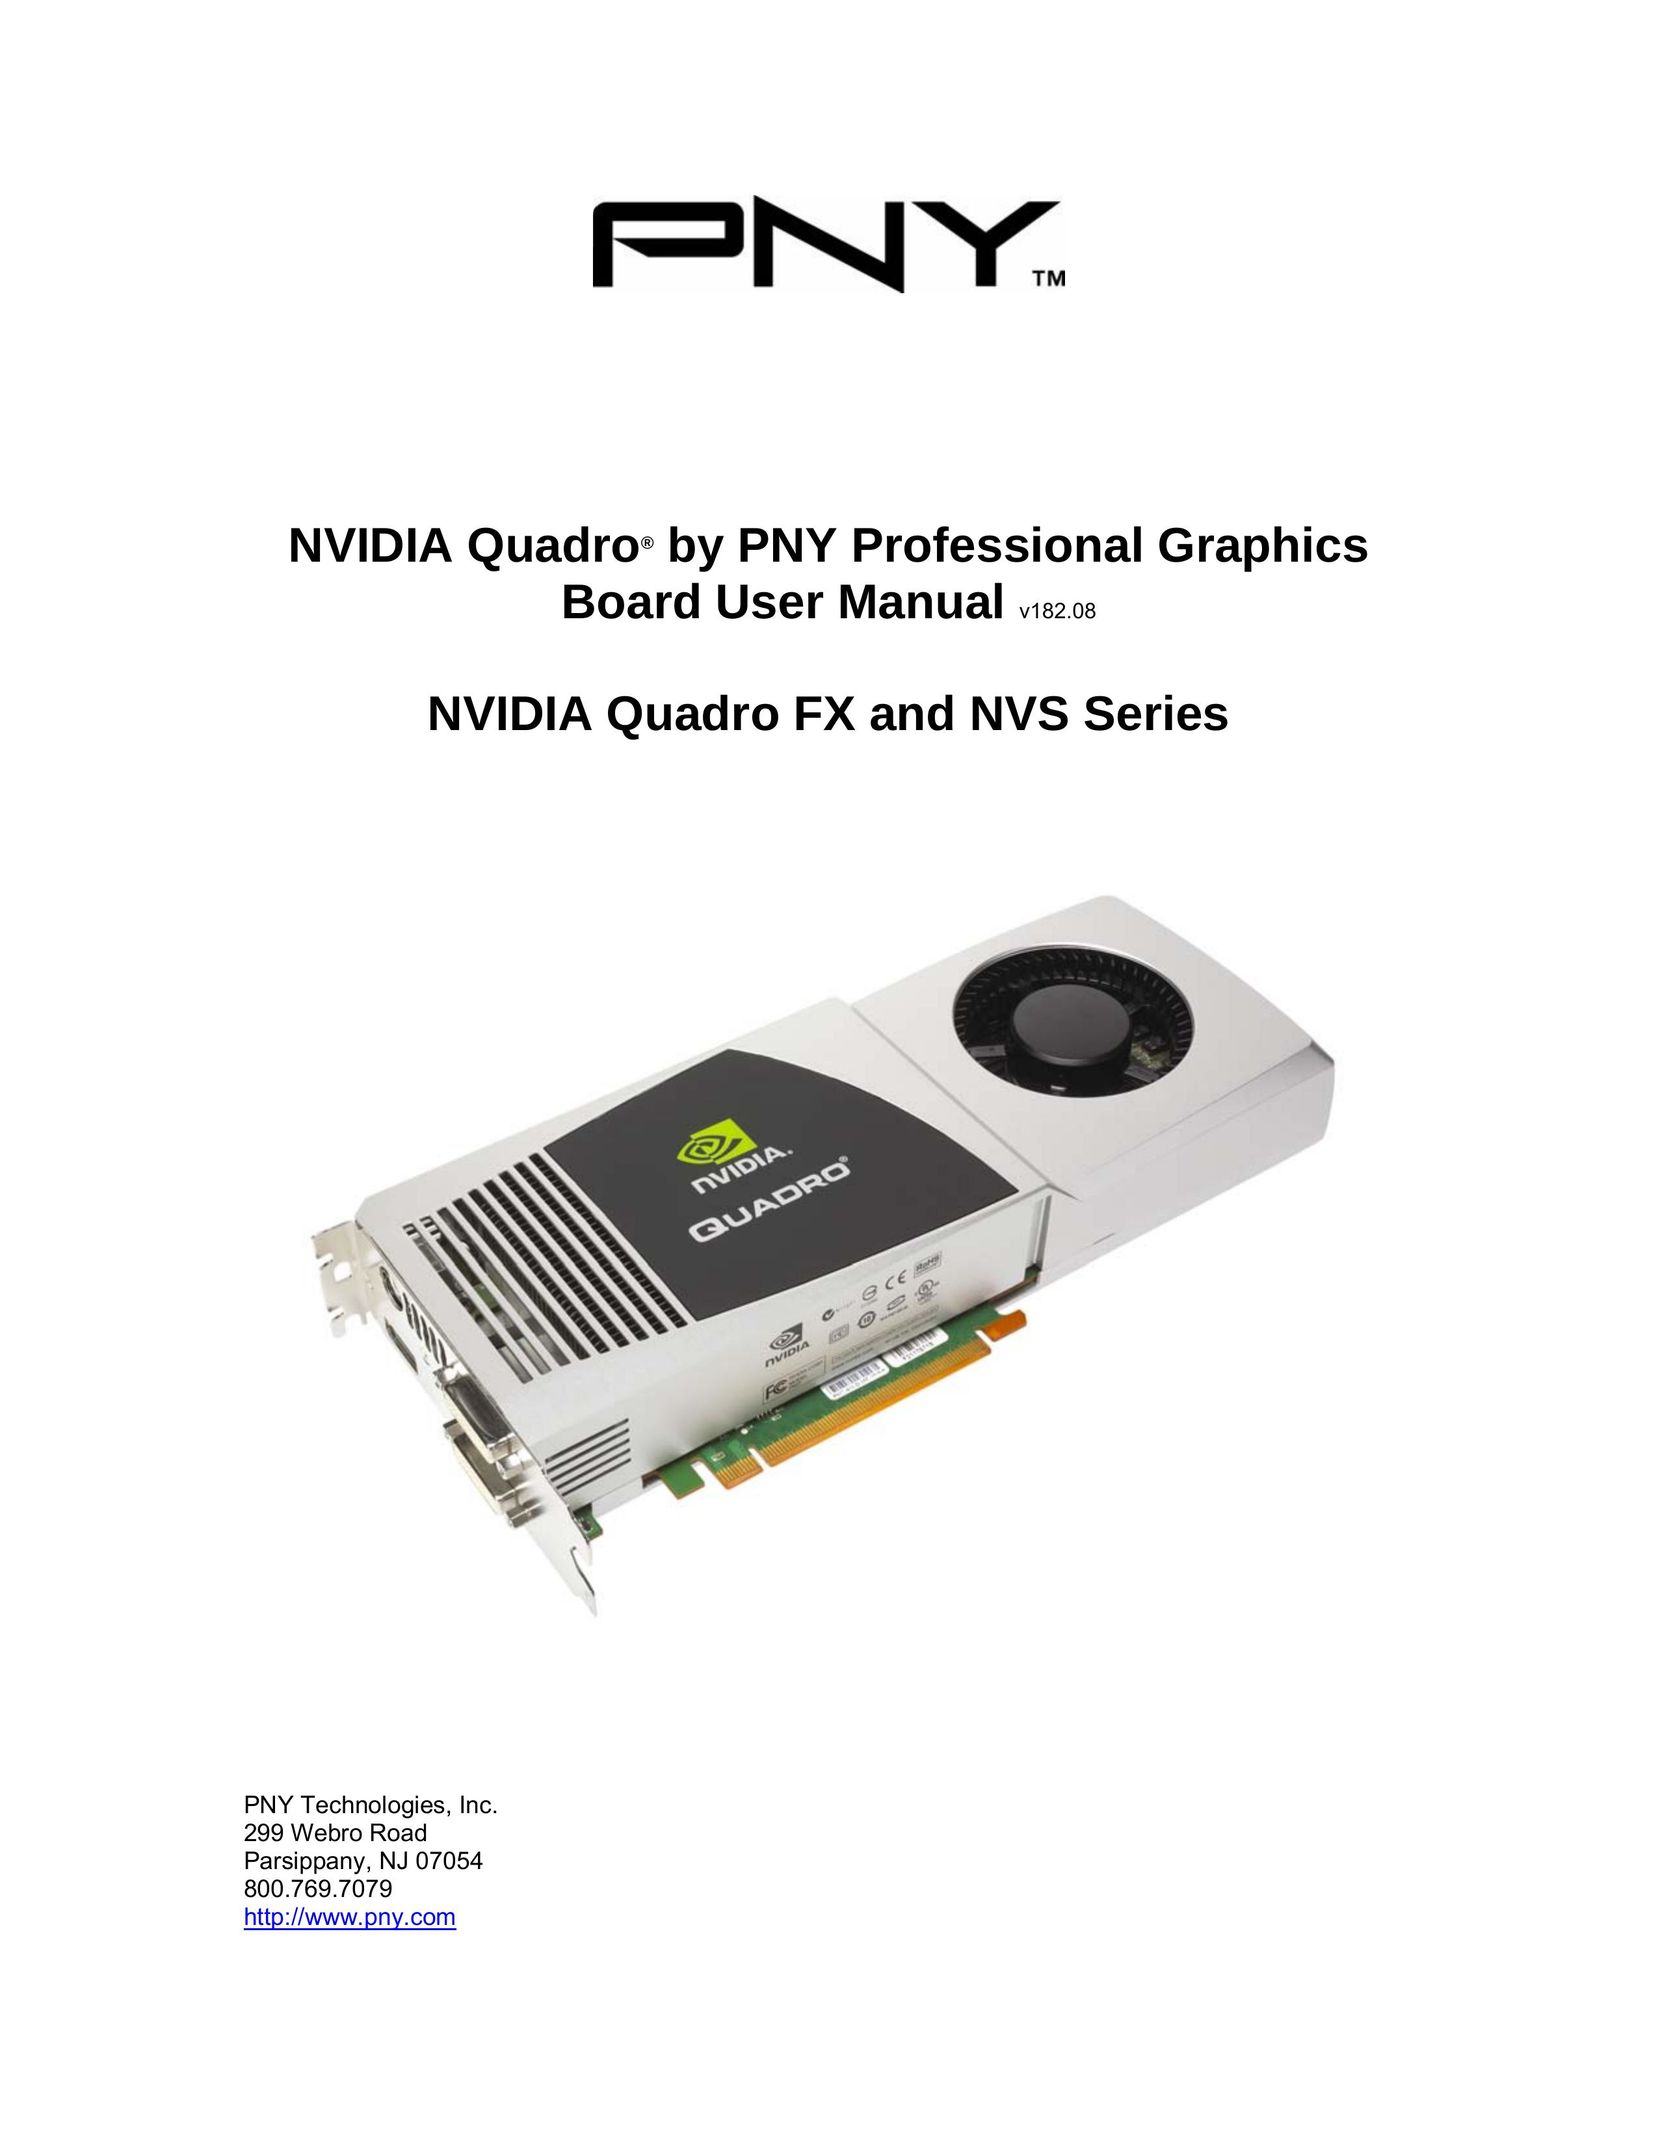 PNY NVS 285 Computer Hardware User Manual